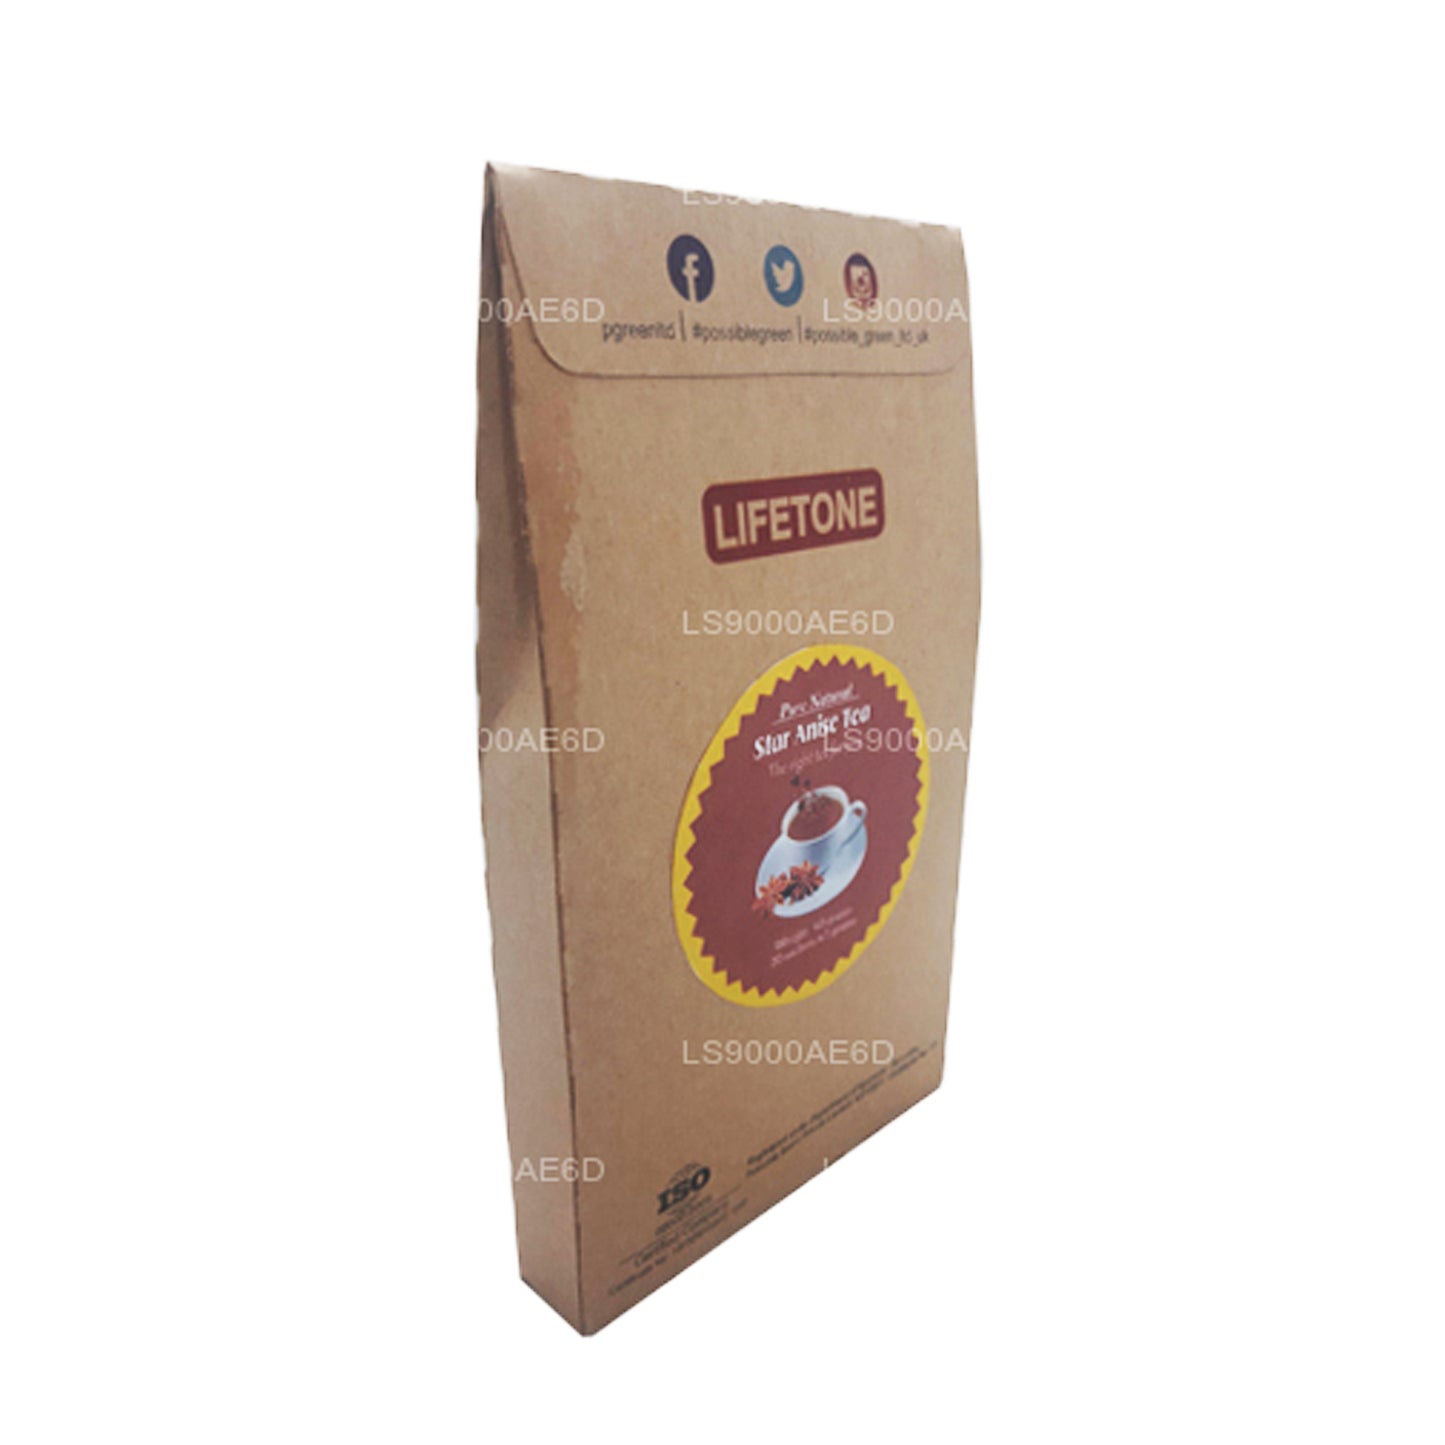 Lifetone Star Anise Tea (40g)